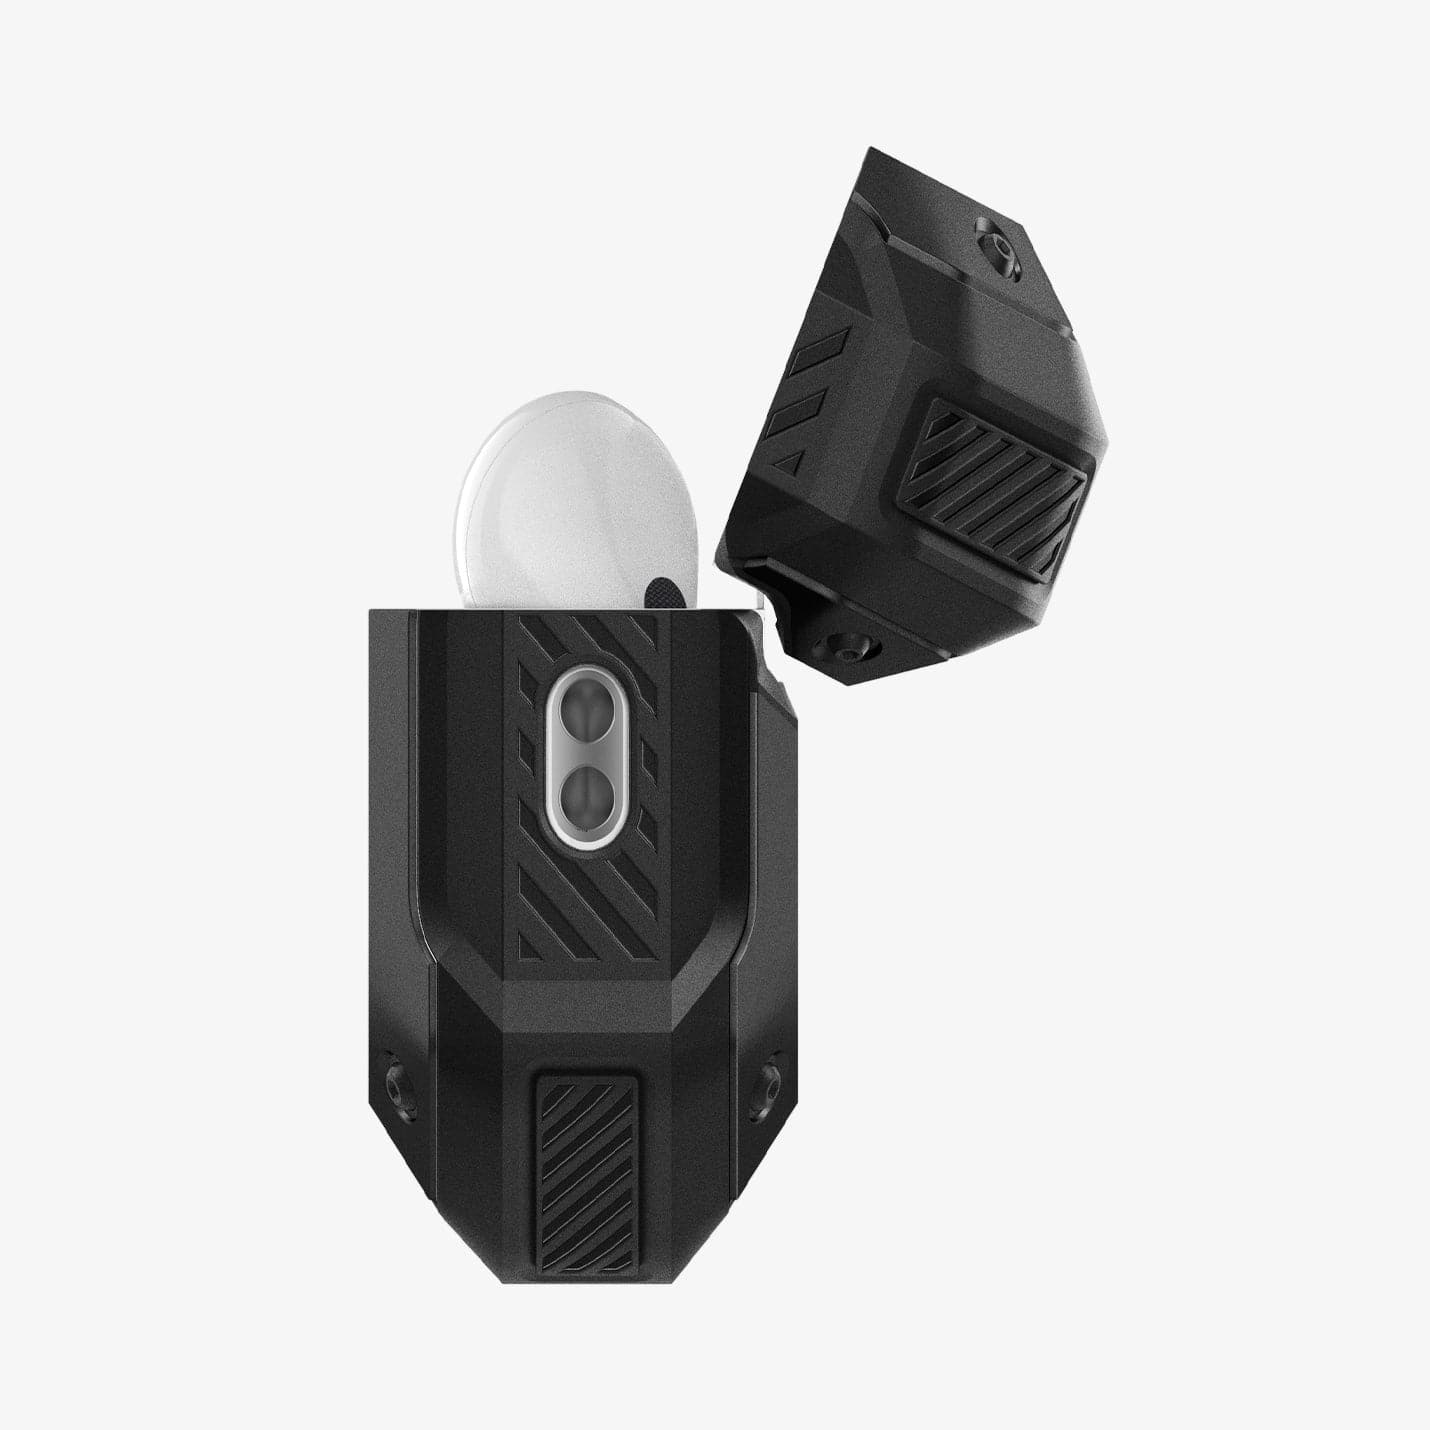 Spigen Tough Armor - Funda para Airpods 1 y 2 (LED frontal visible), color  negro